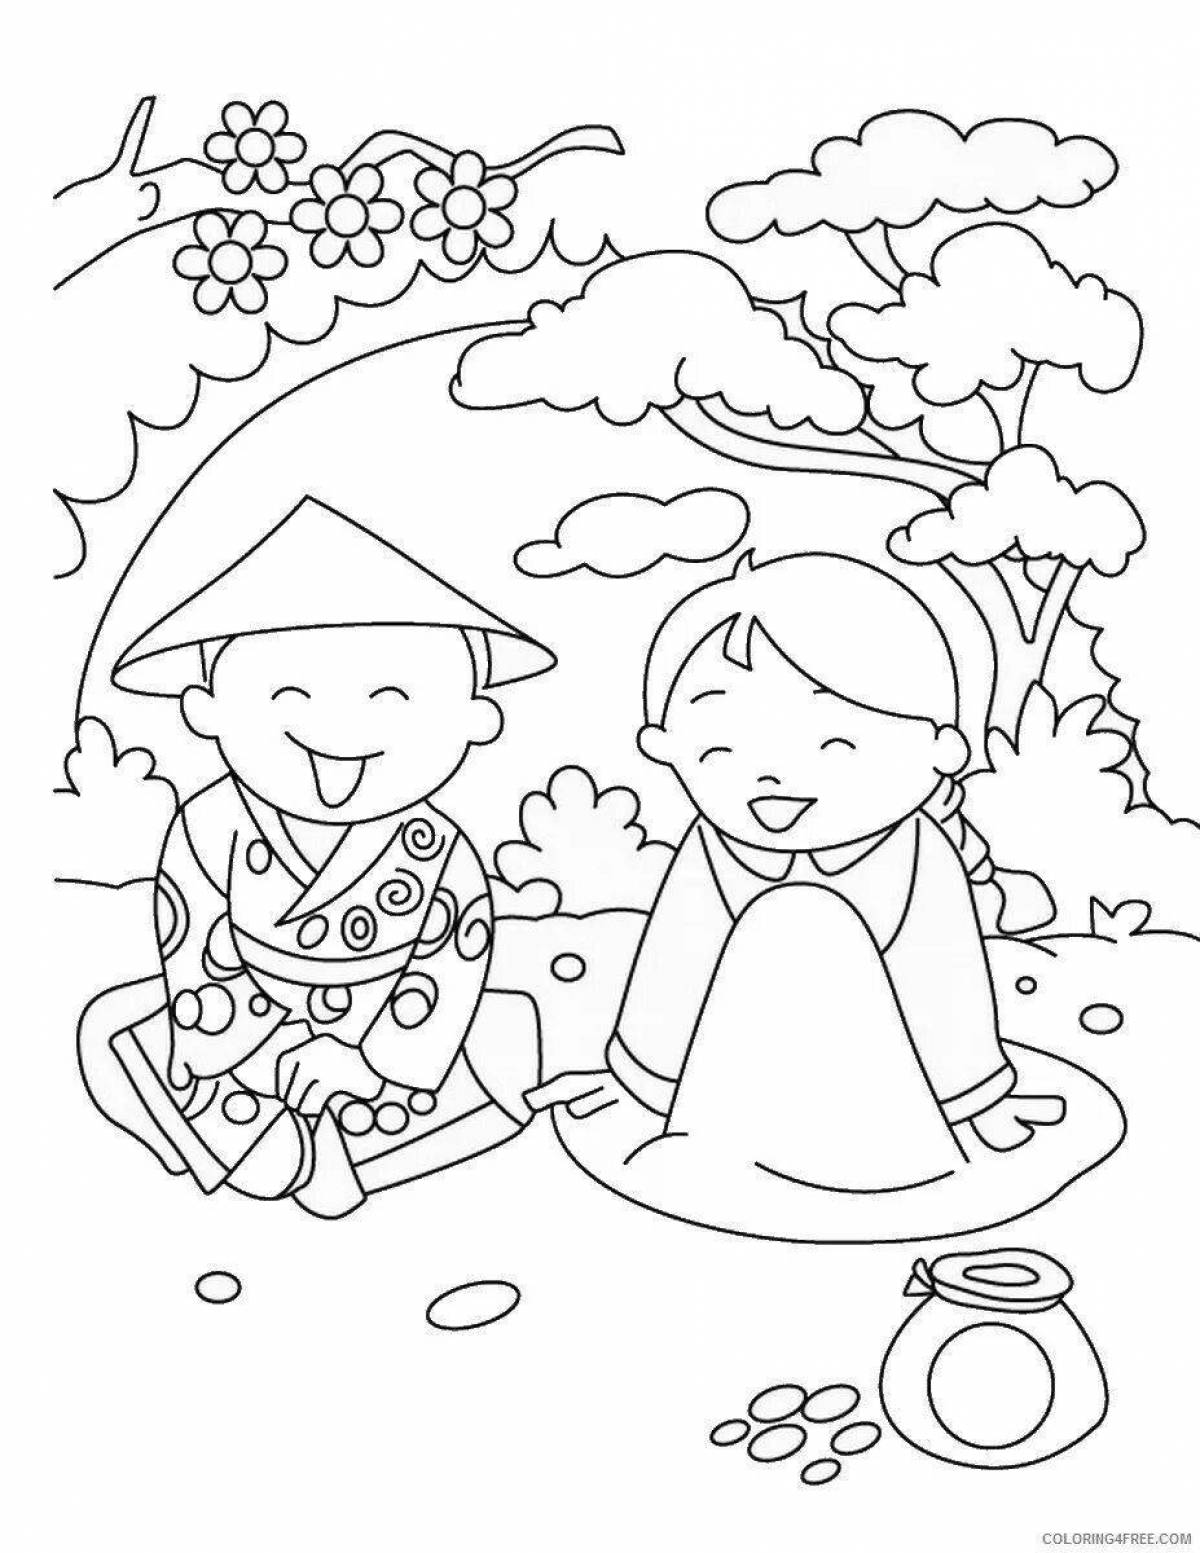 Charming sagaalgan coloring book for preschoolers